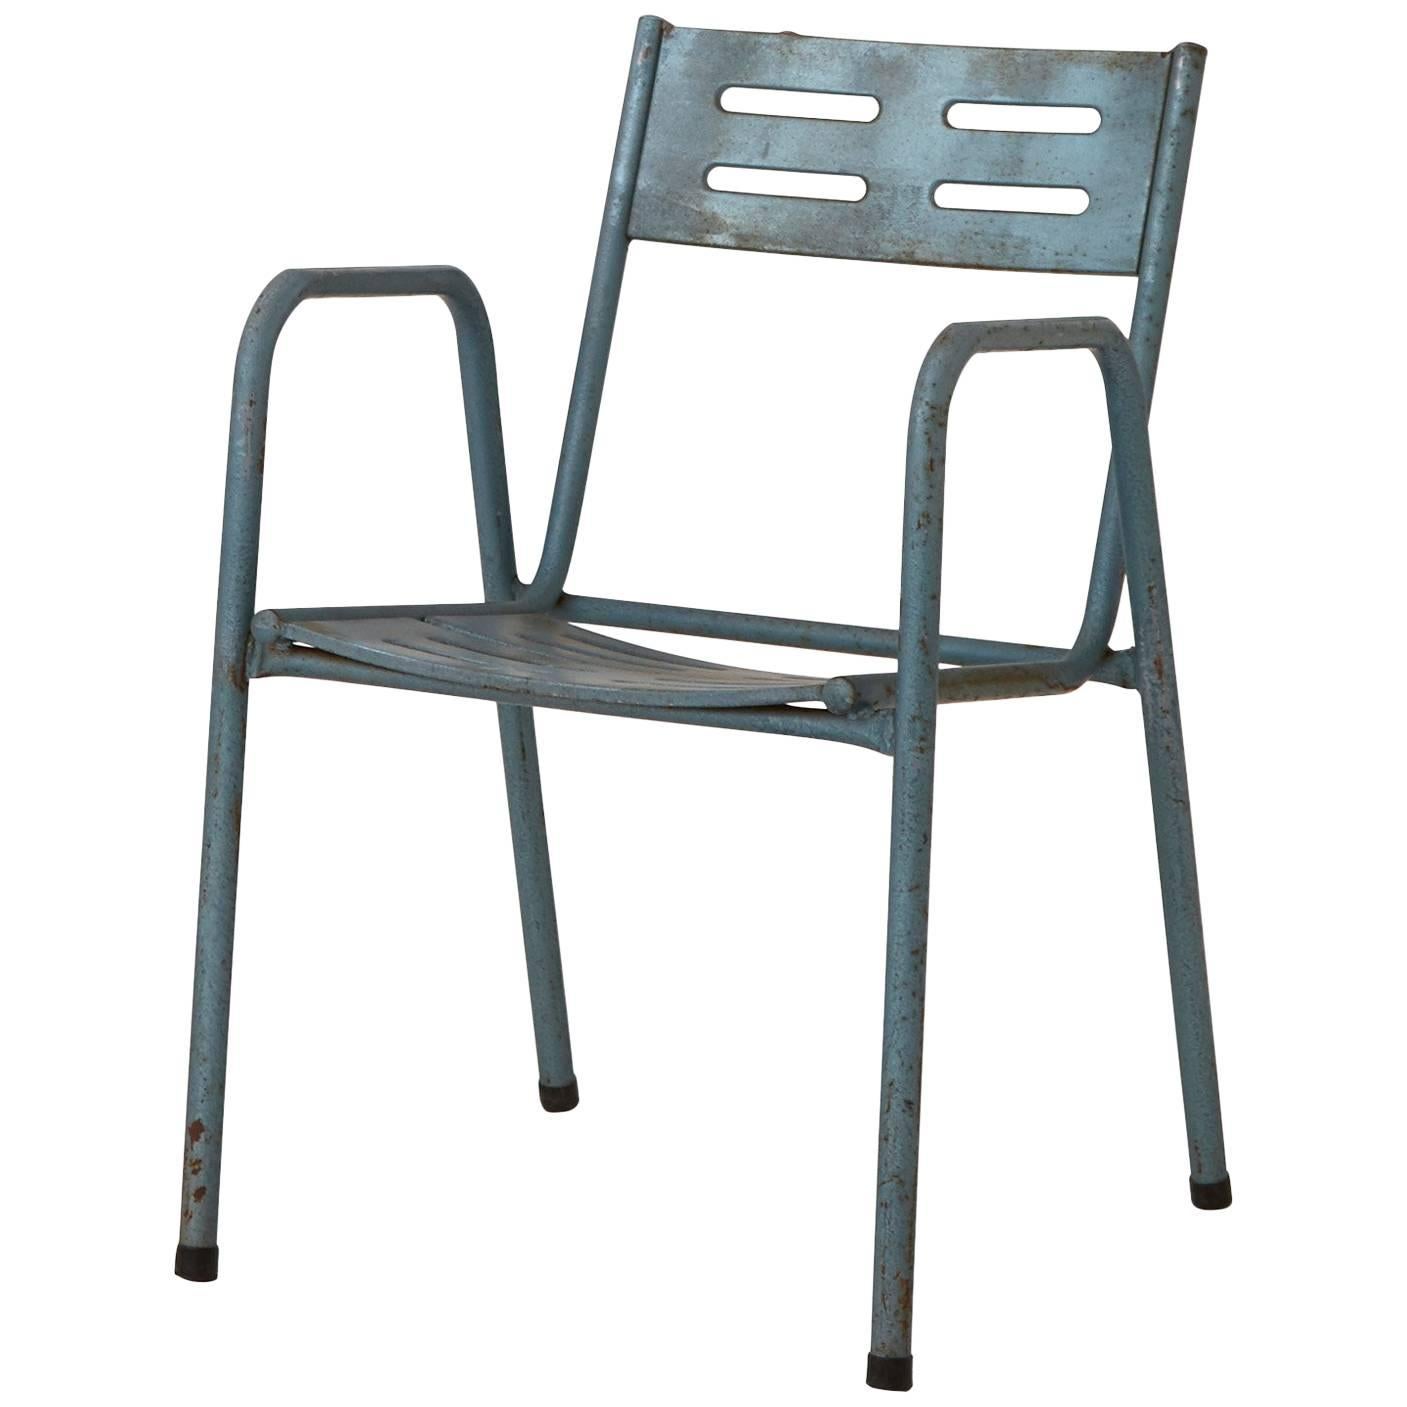 Spanish Metal Garden Chair